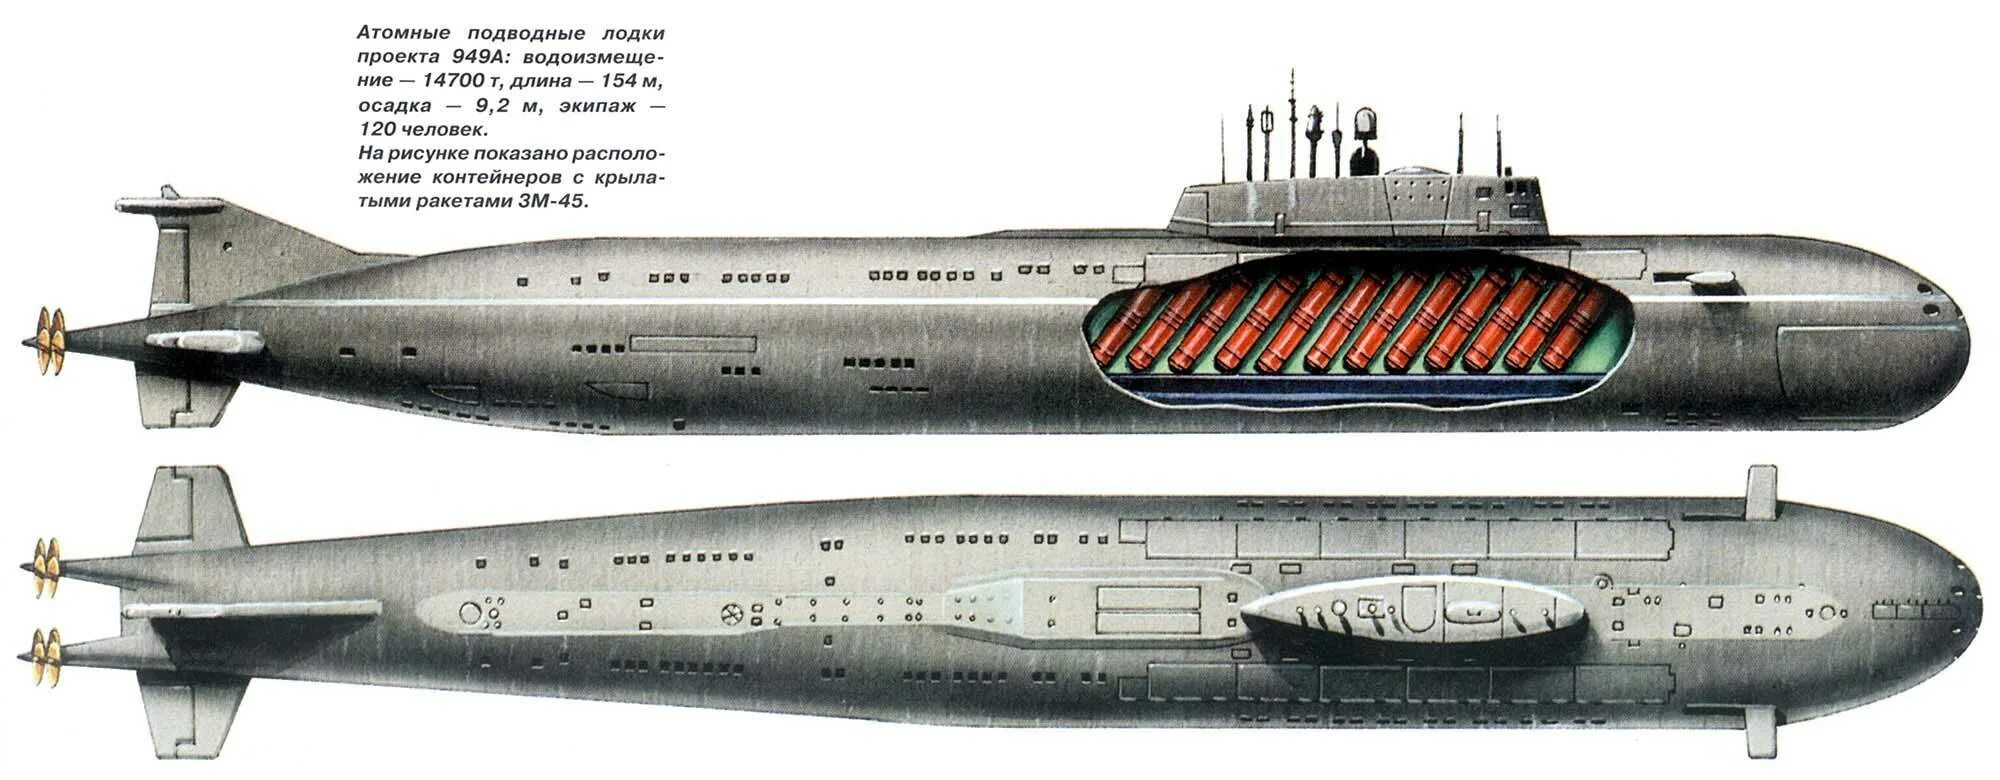 Два пл. Подводная лодка 949а проекта Антей. Проект подводной лодки 949 а Антей. Подводная лодка пр.949а "Курск". Проект 949а Антей в разрезе.